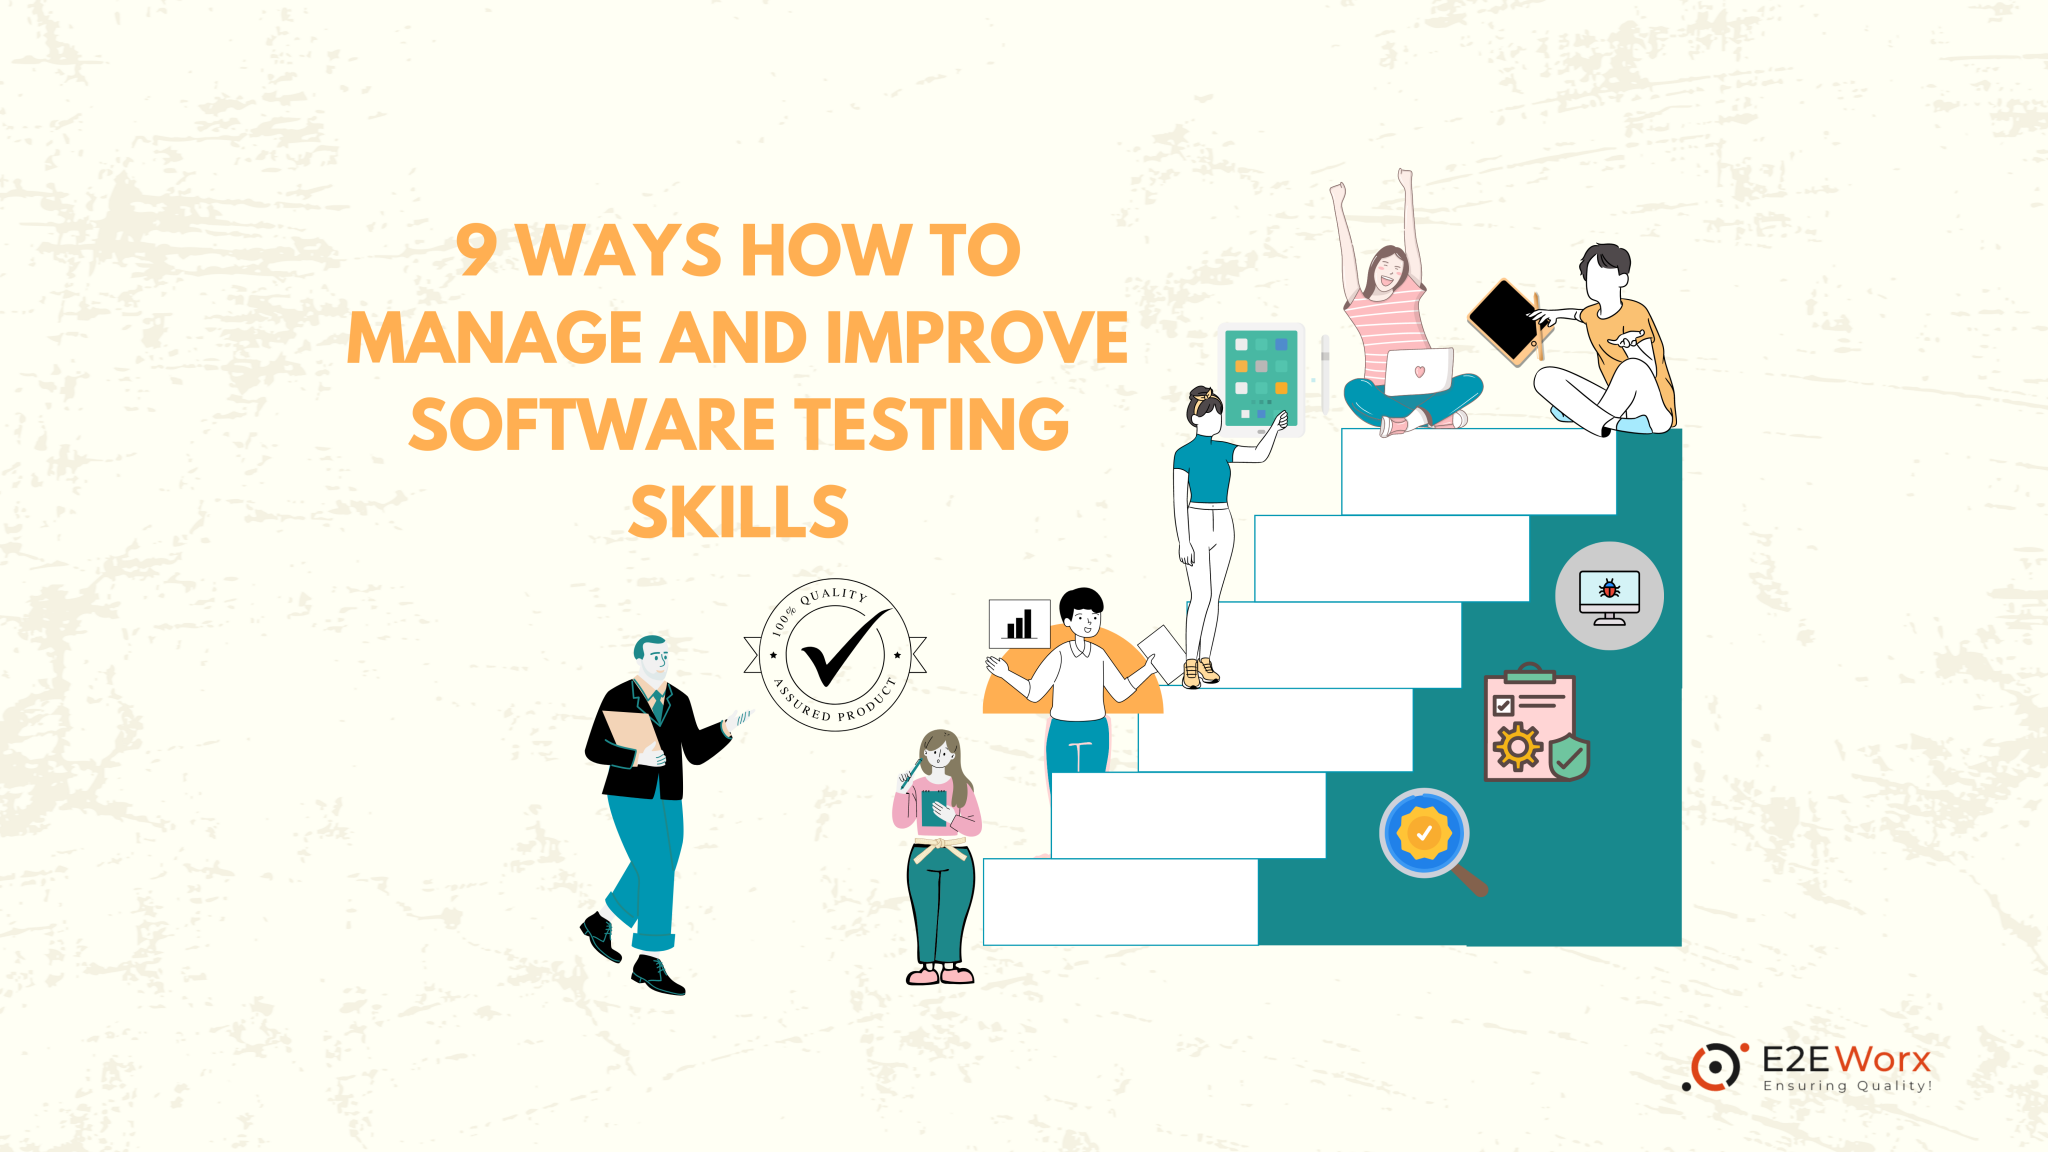 Software Testing Skills by E2EWorx